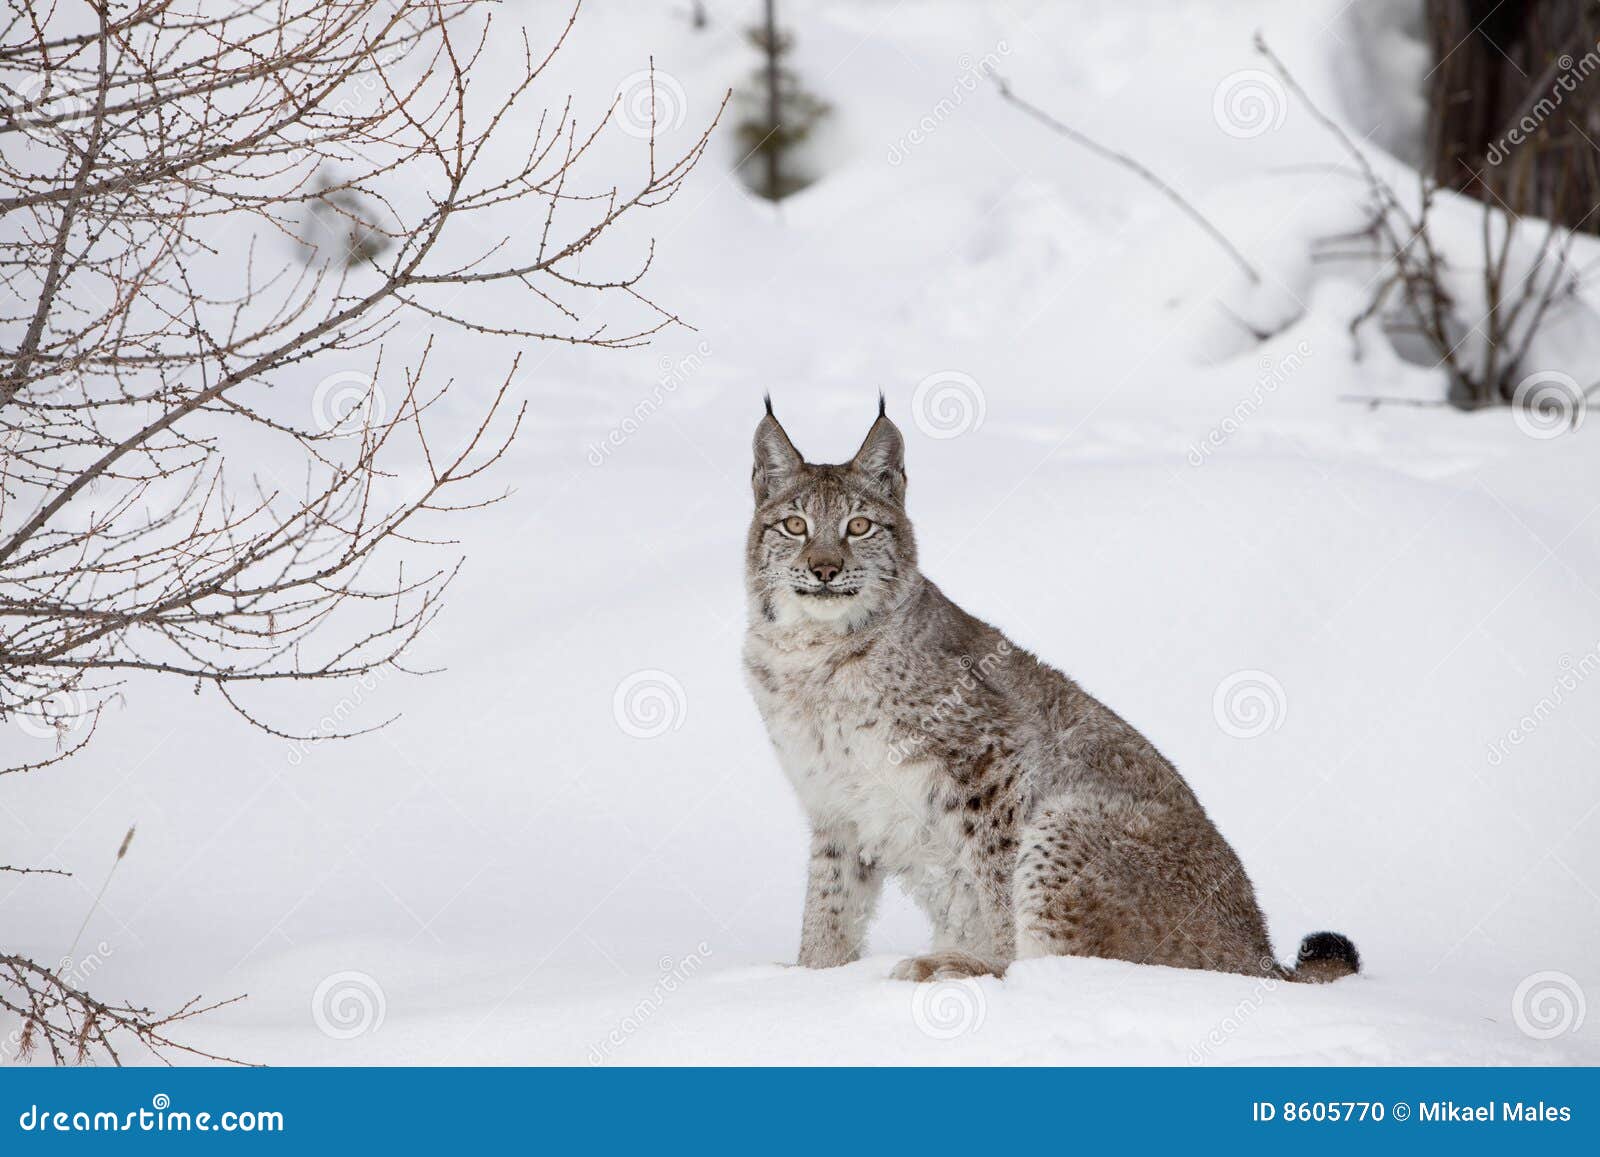 portrait canadian lynx